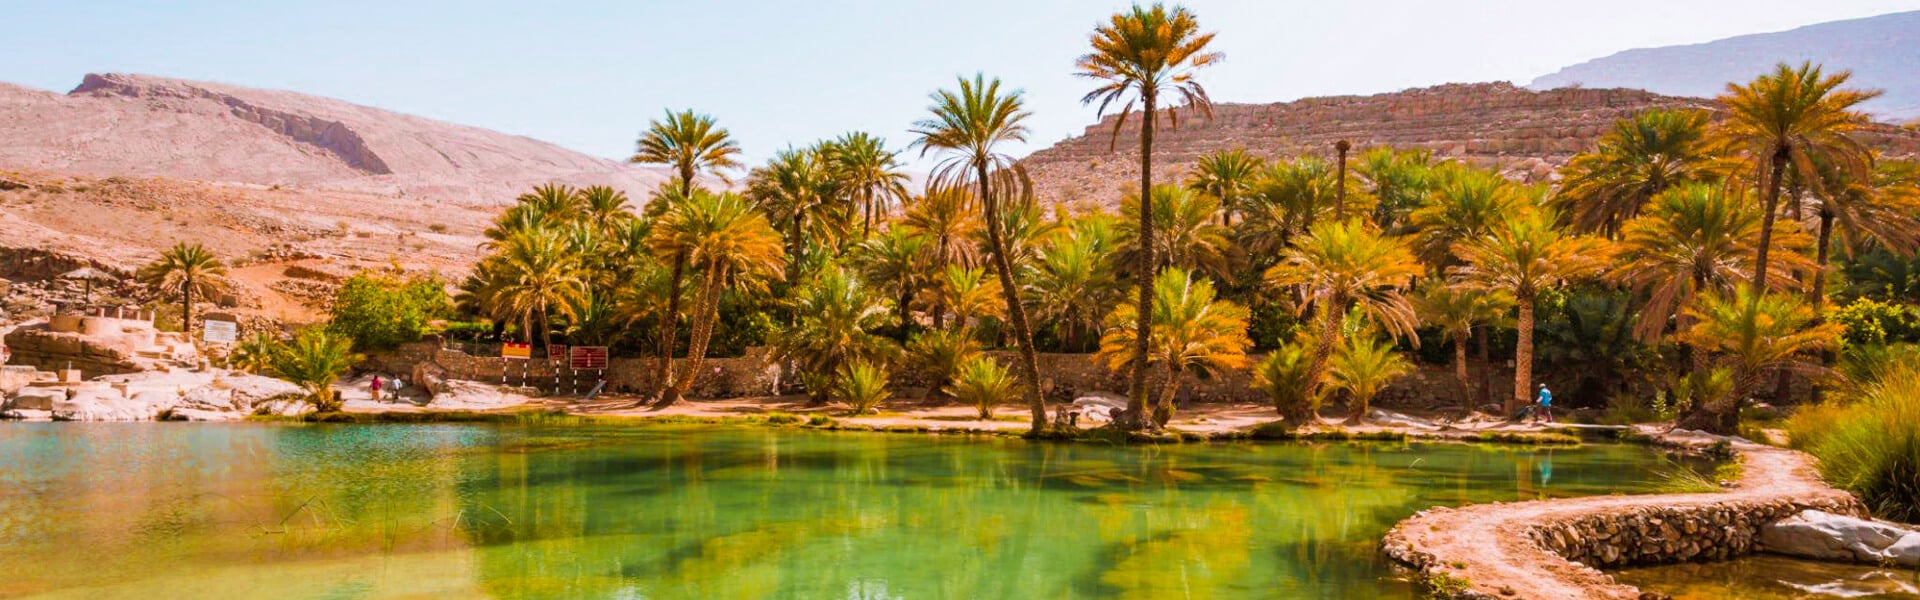 Oasis of Wadi Bani Khalid